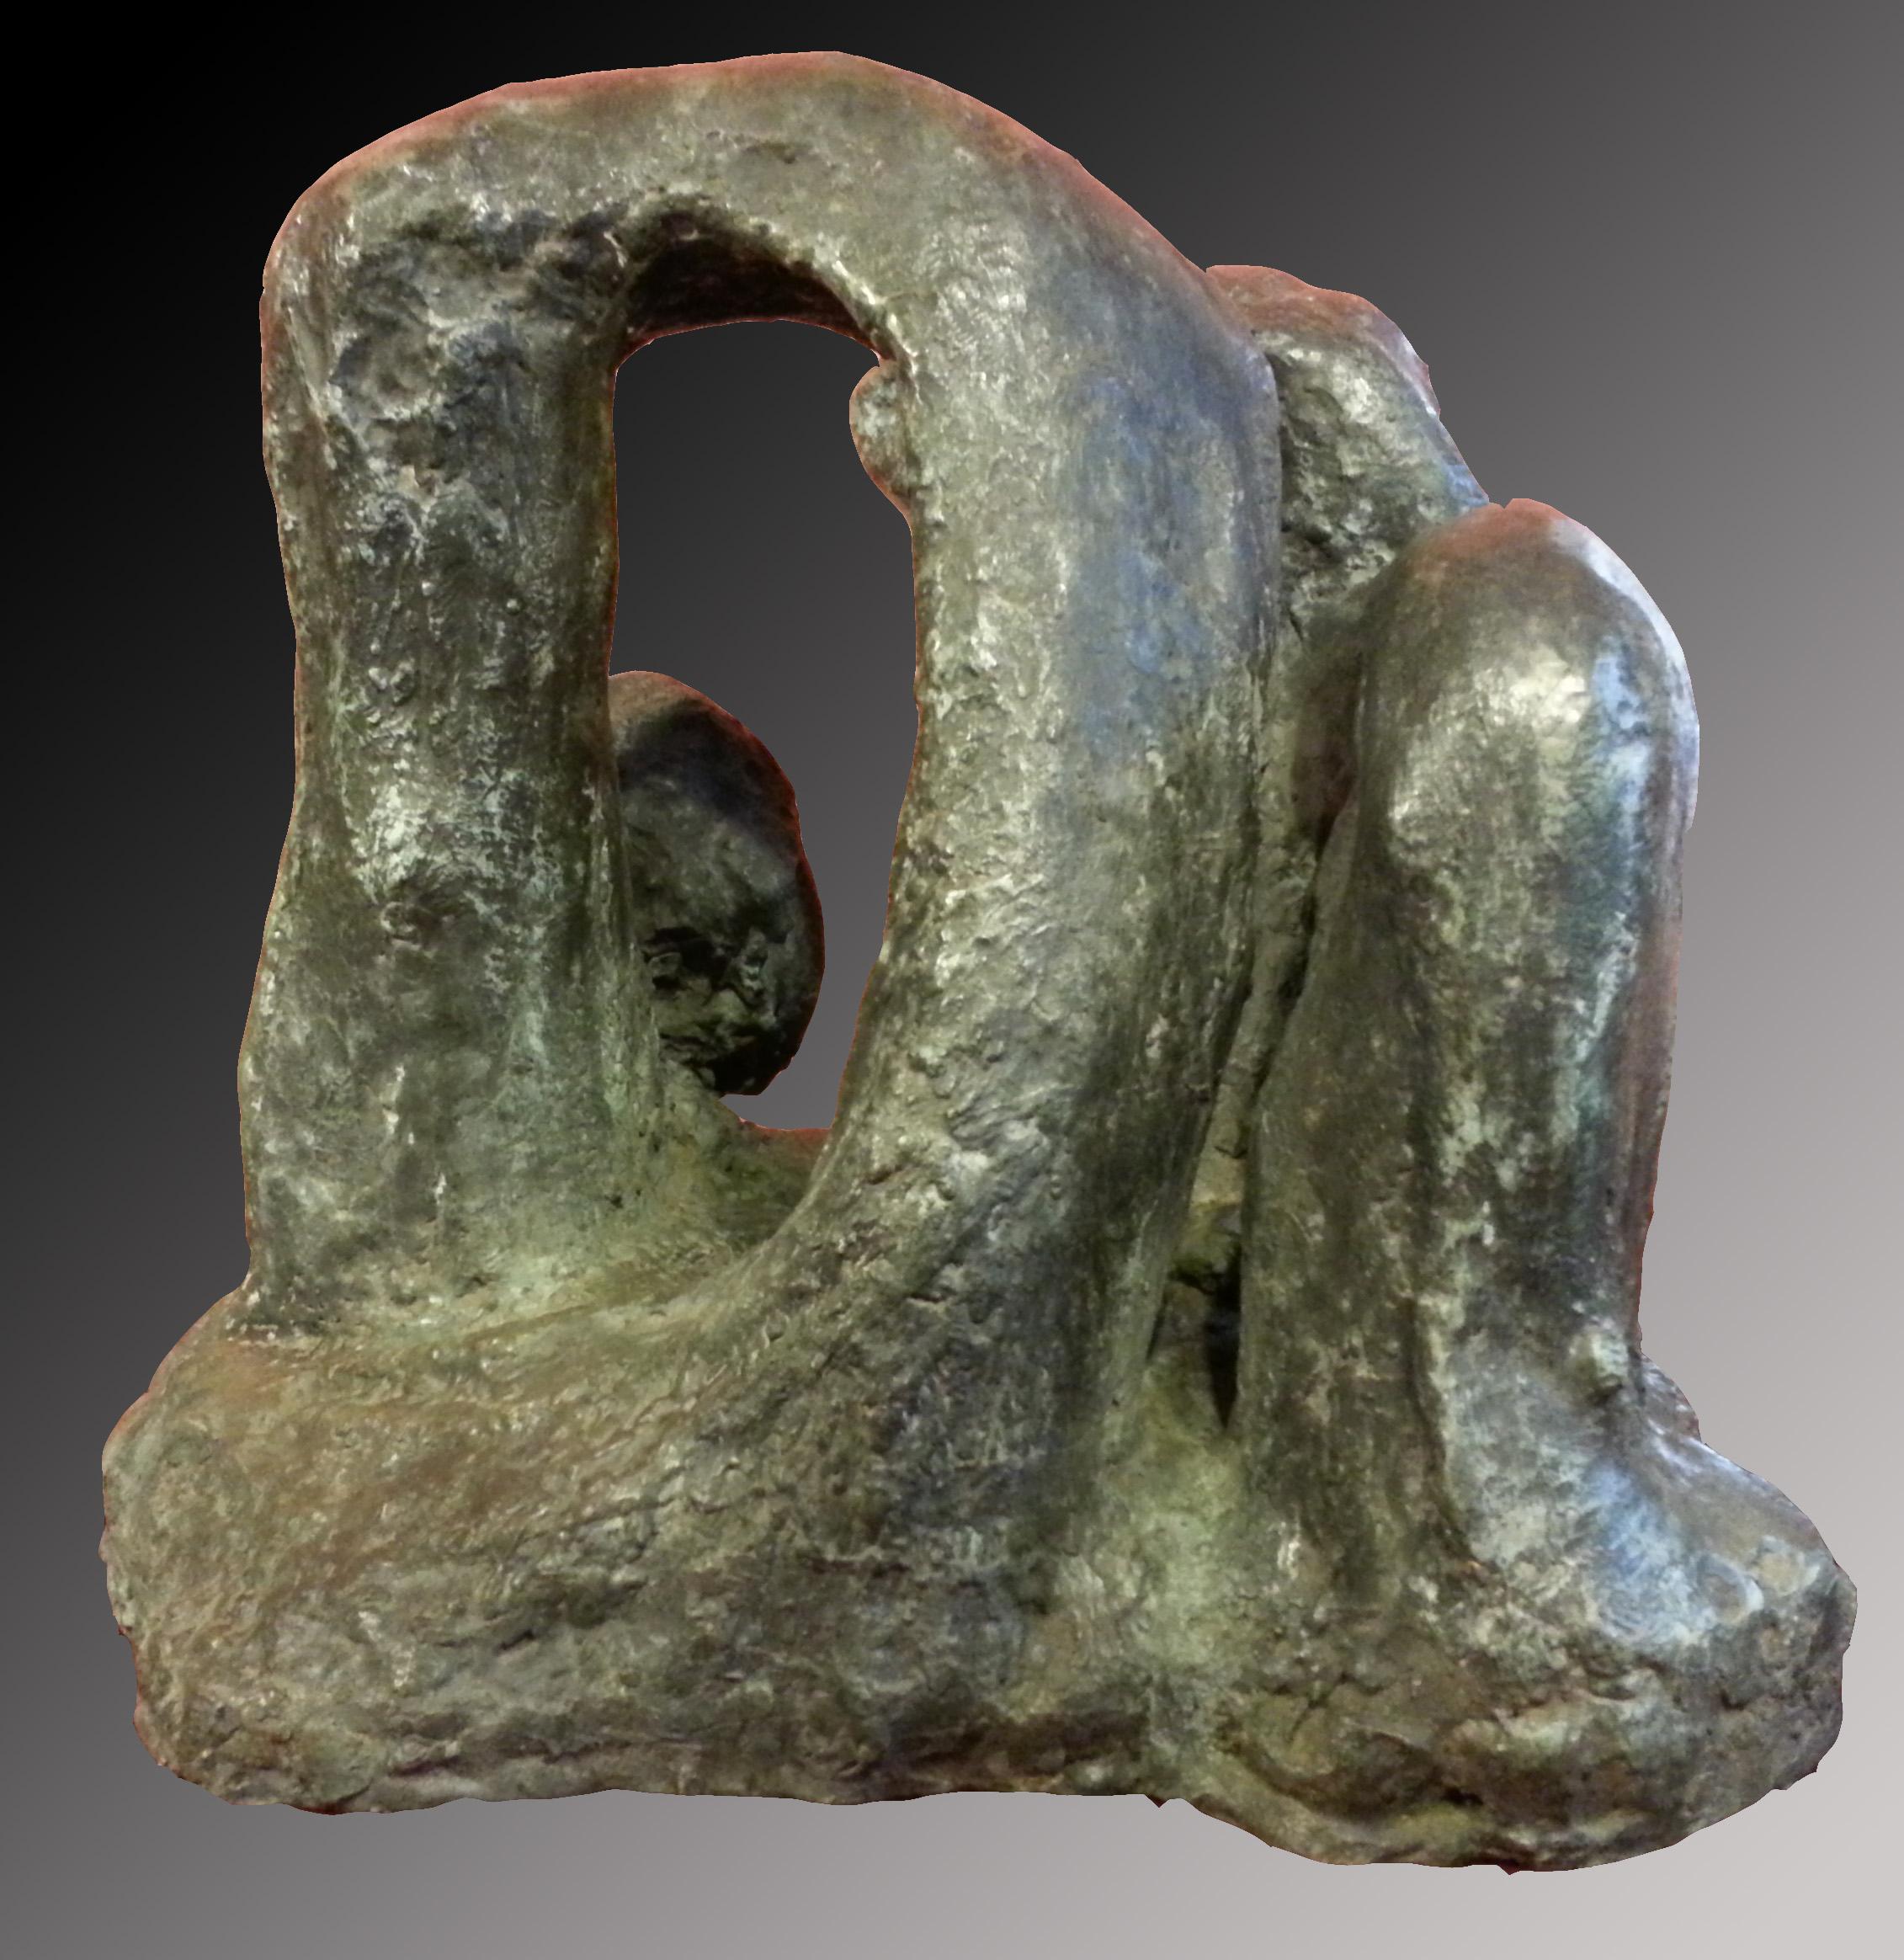 Bronze Sculpture

Lalloz Foundry,
Signed and Numbered :  1 / 8

Bibliography: 
Pierre Descargues, Catherine Val la Clandestine, Paris, Area/Descartes & Cie, 2011.